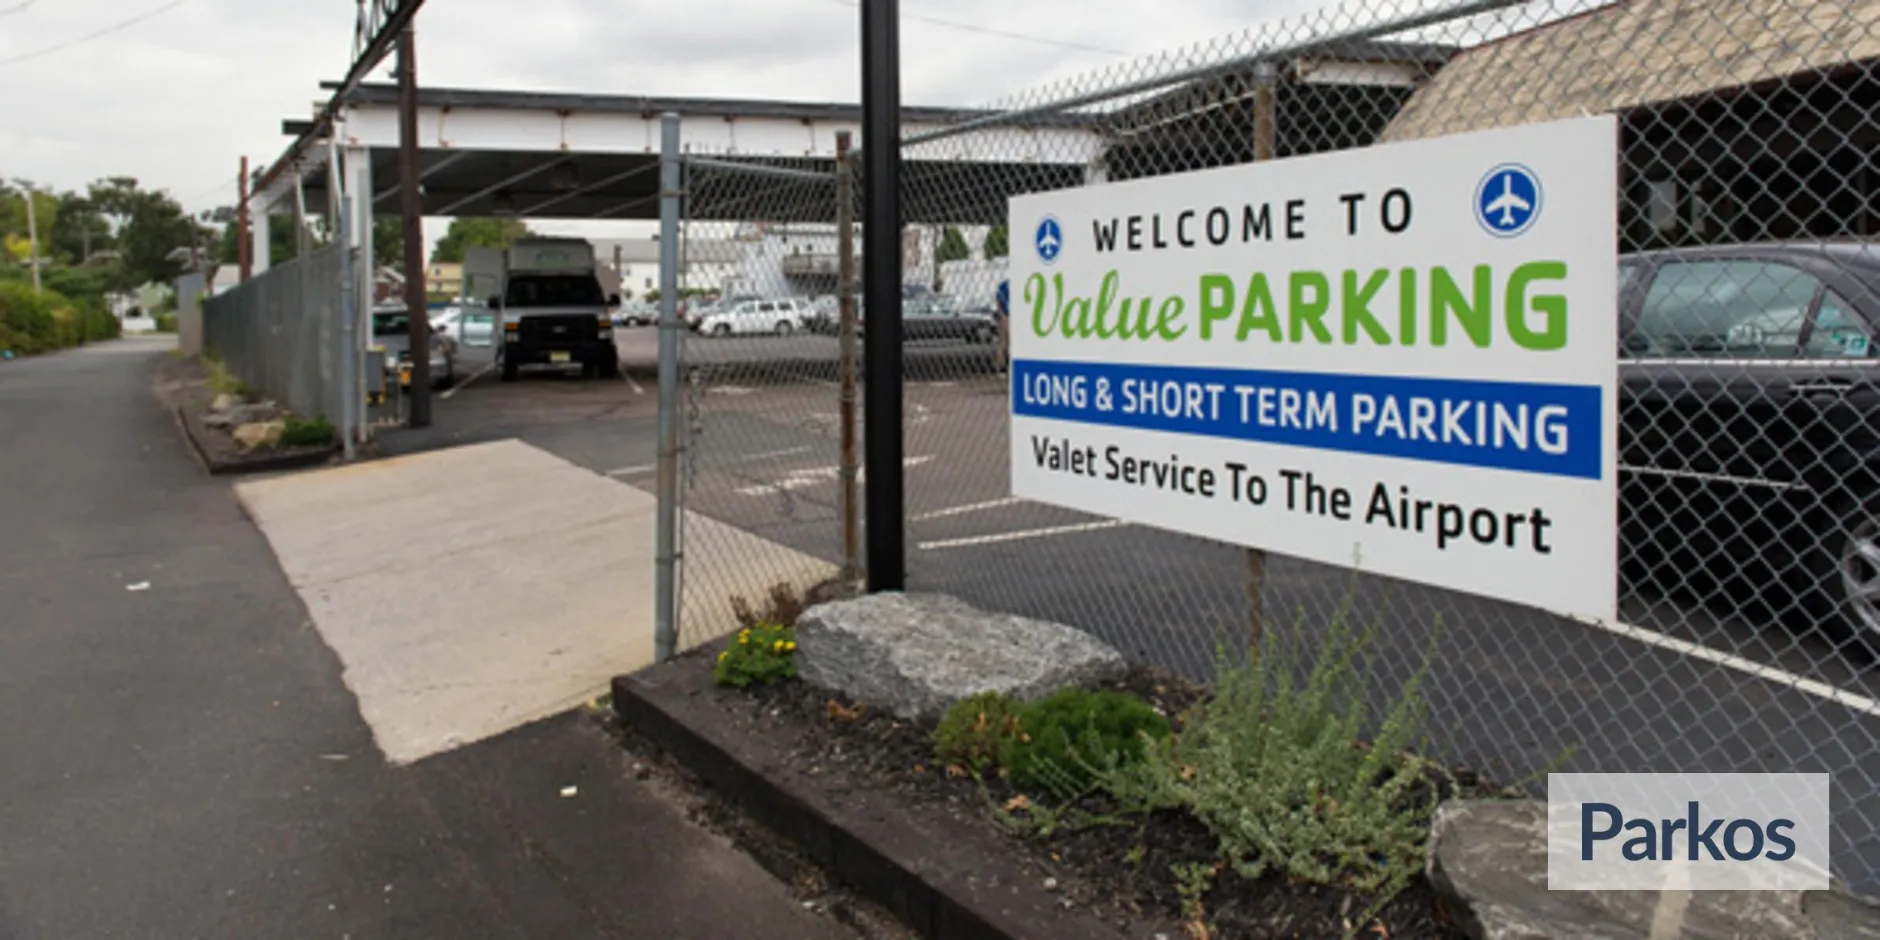 Value Parking Newark Airport (EWR) - Newark Airport Parking - picture 1